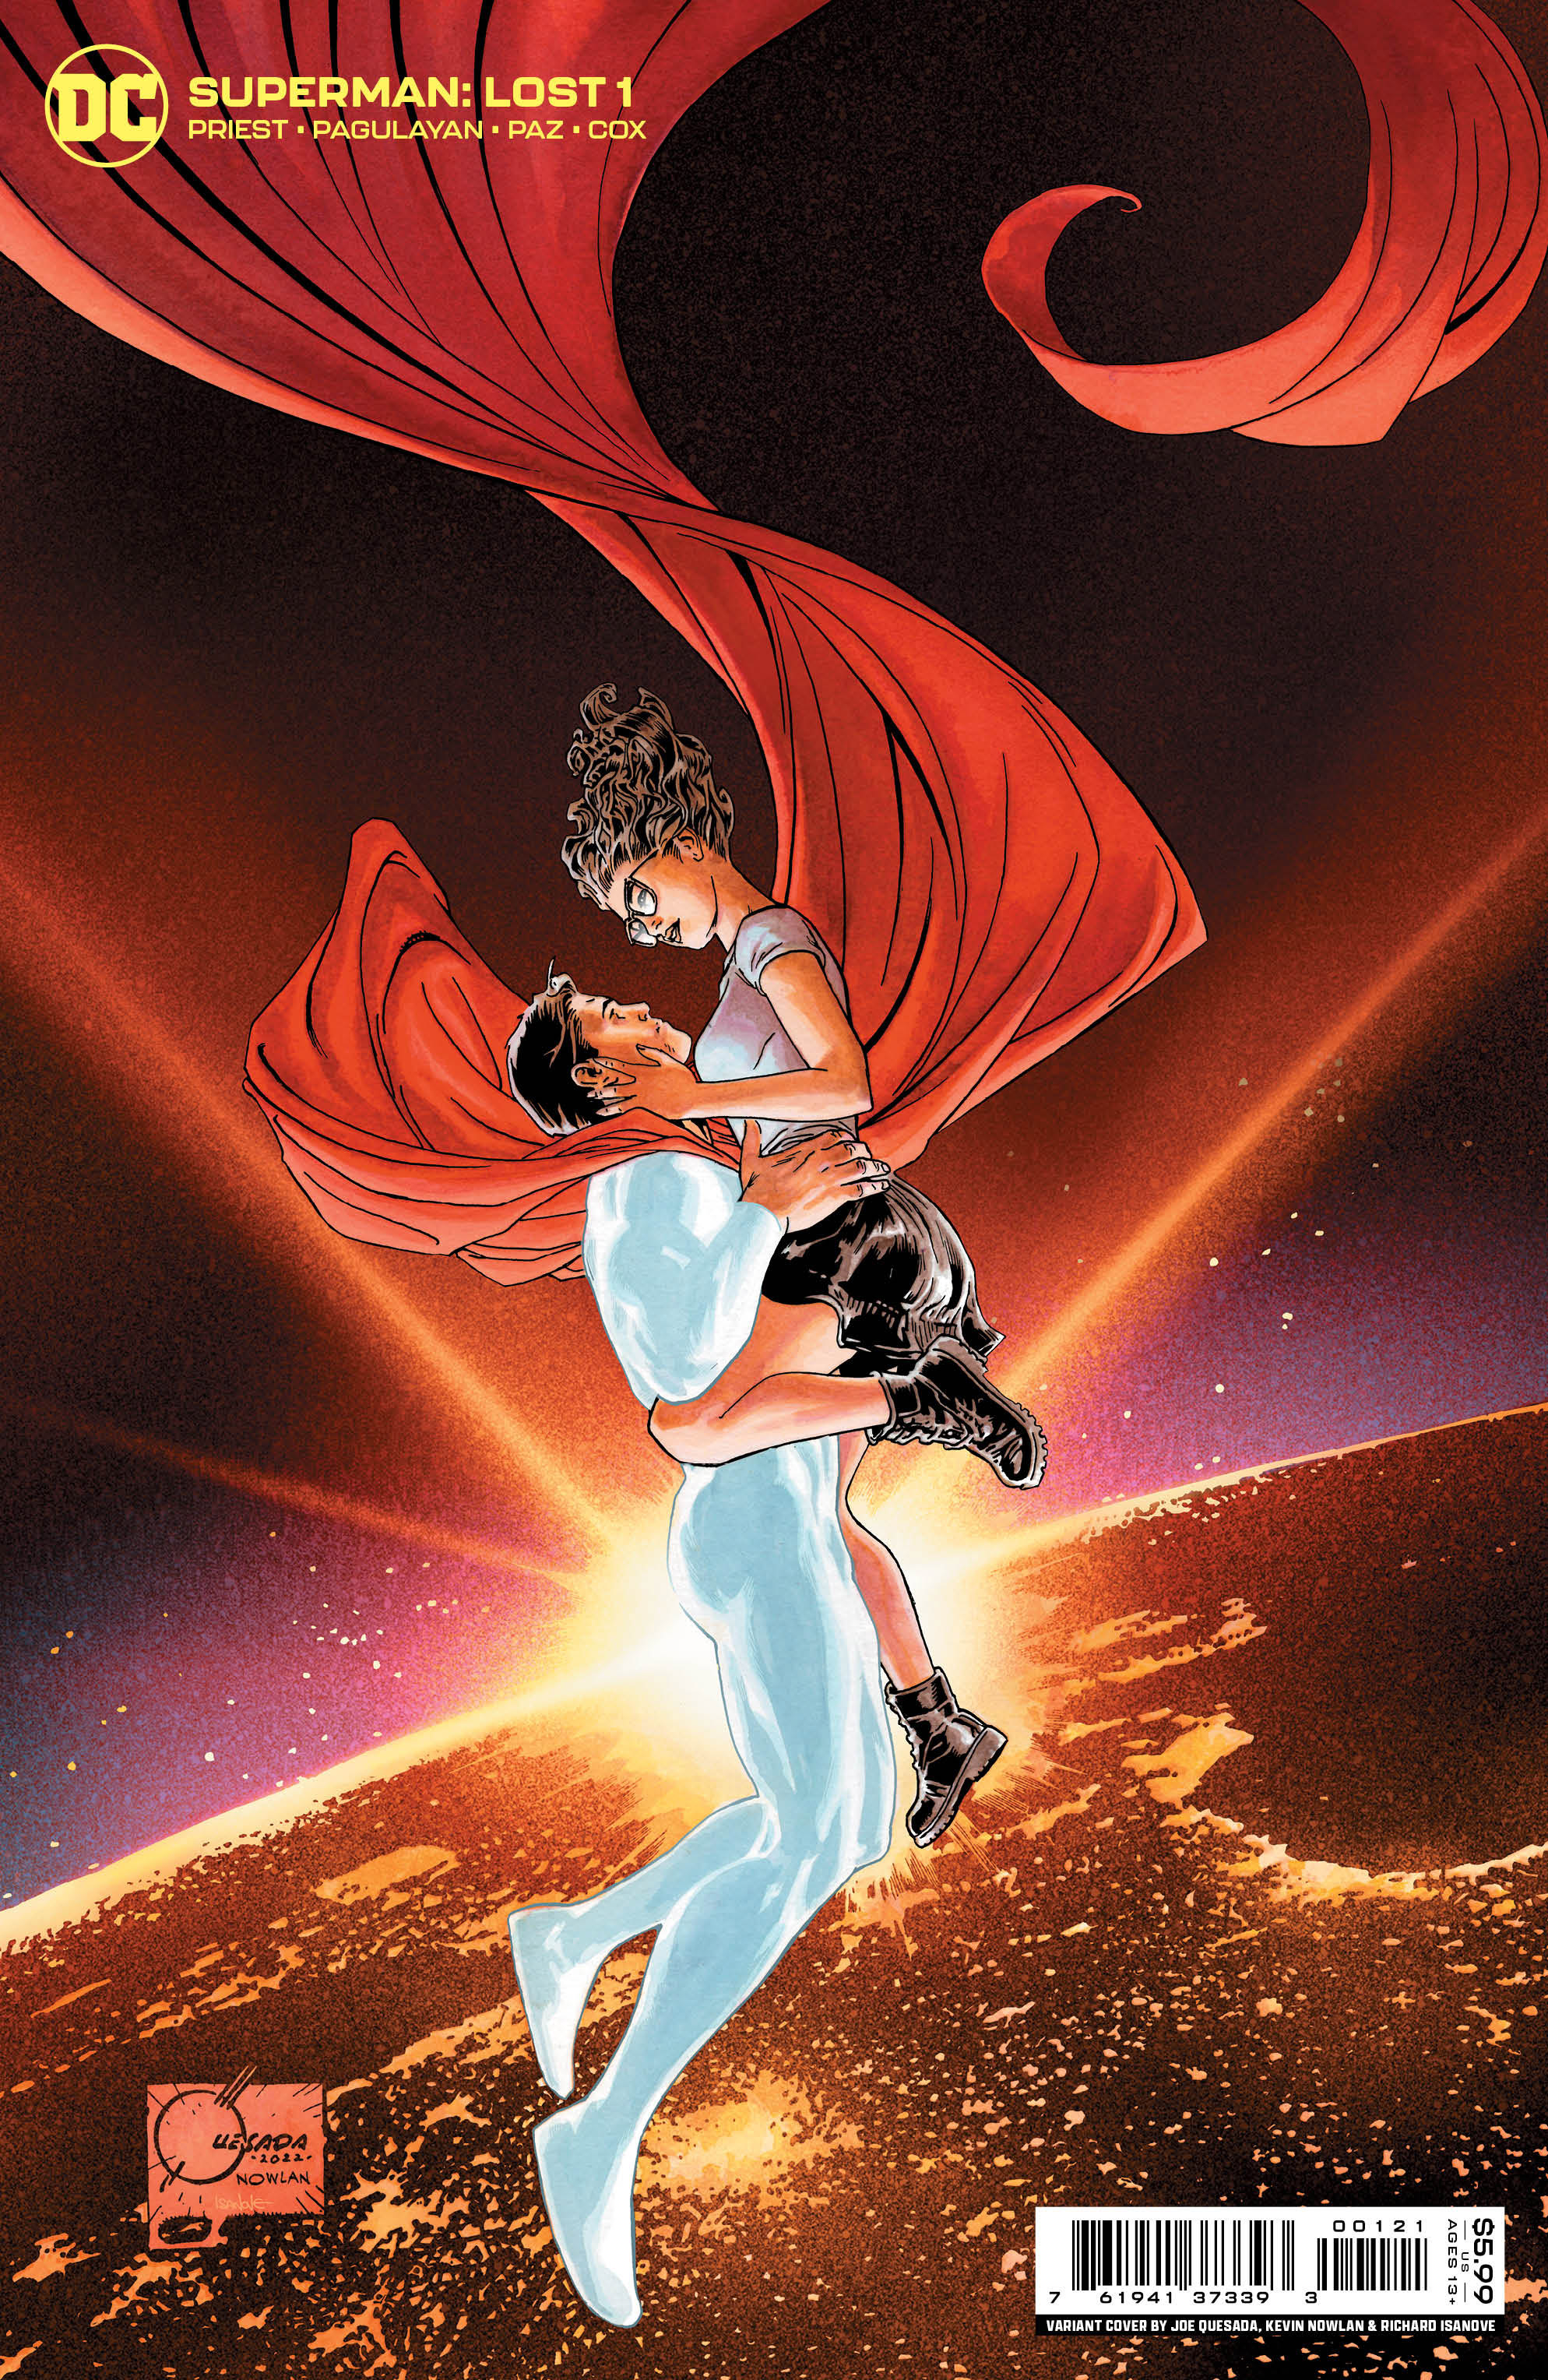 Superman Lost #1 (Of 10) Cover B Joe Quesada Card Stock Variant